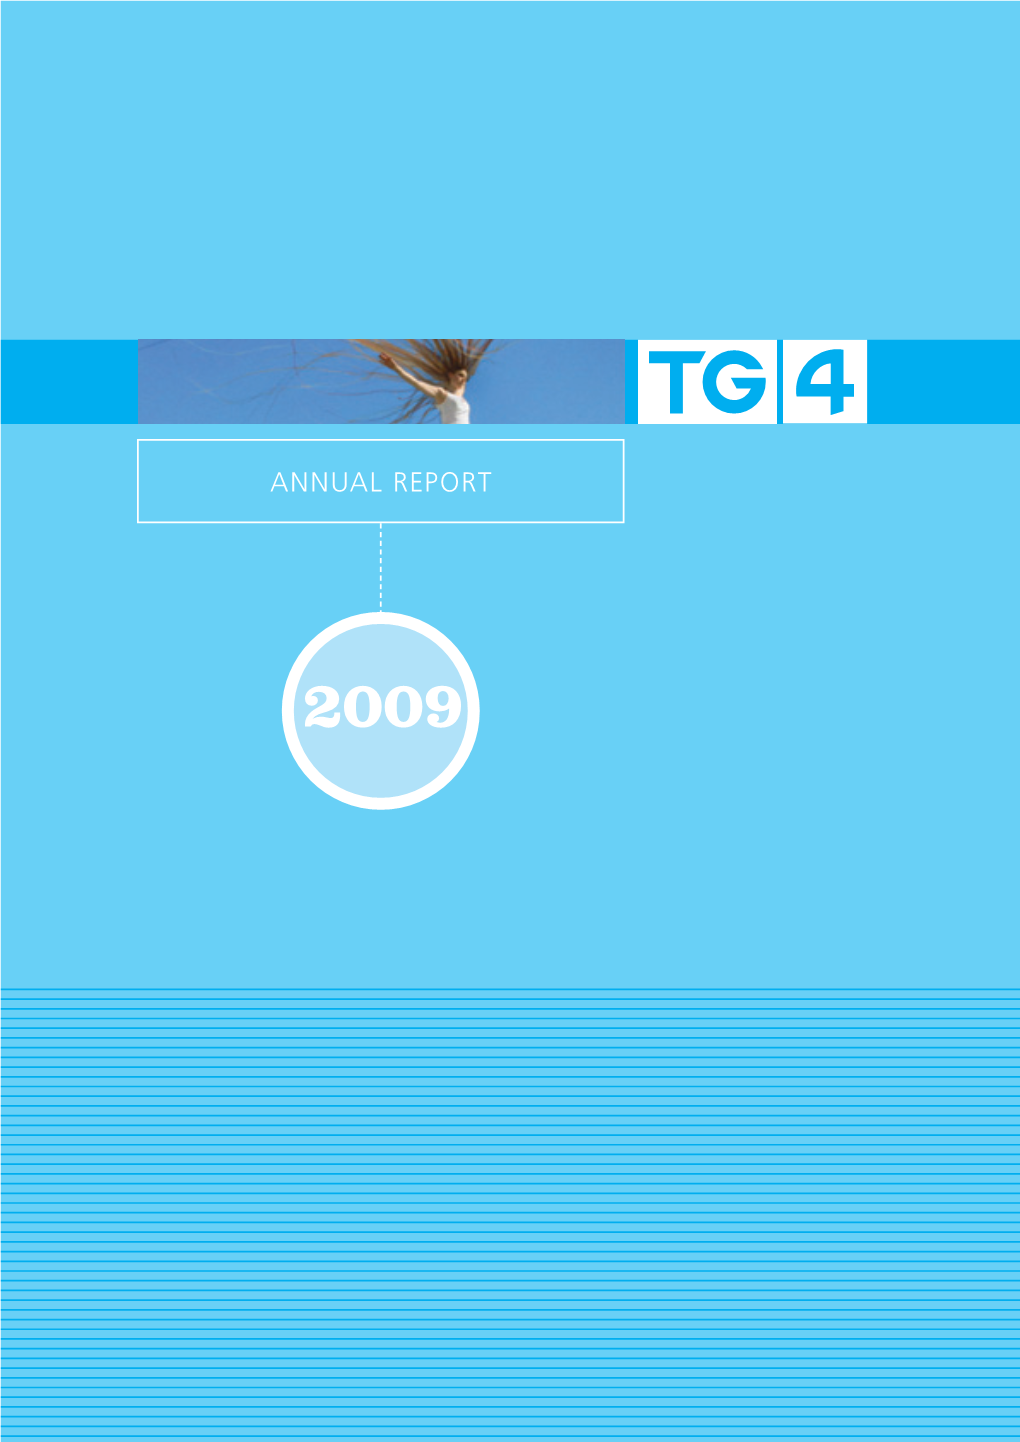 Annual Report Annual Tg4 Annual Report 2009 Tg4 Annual Report Contents